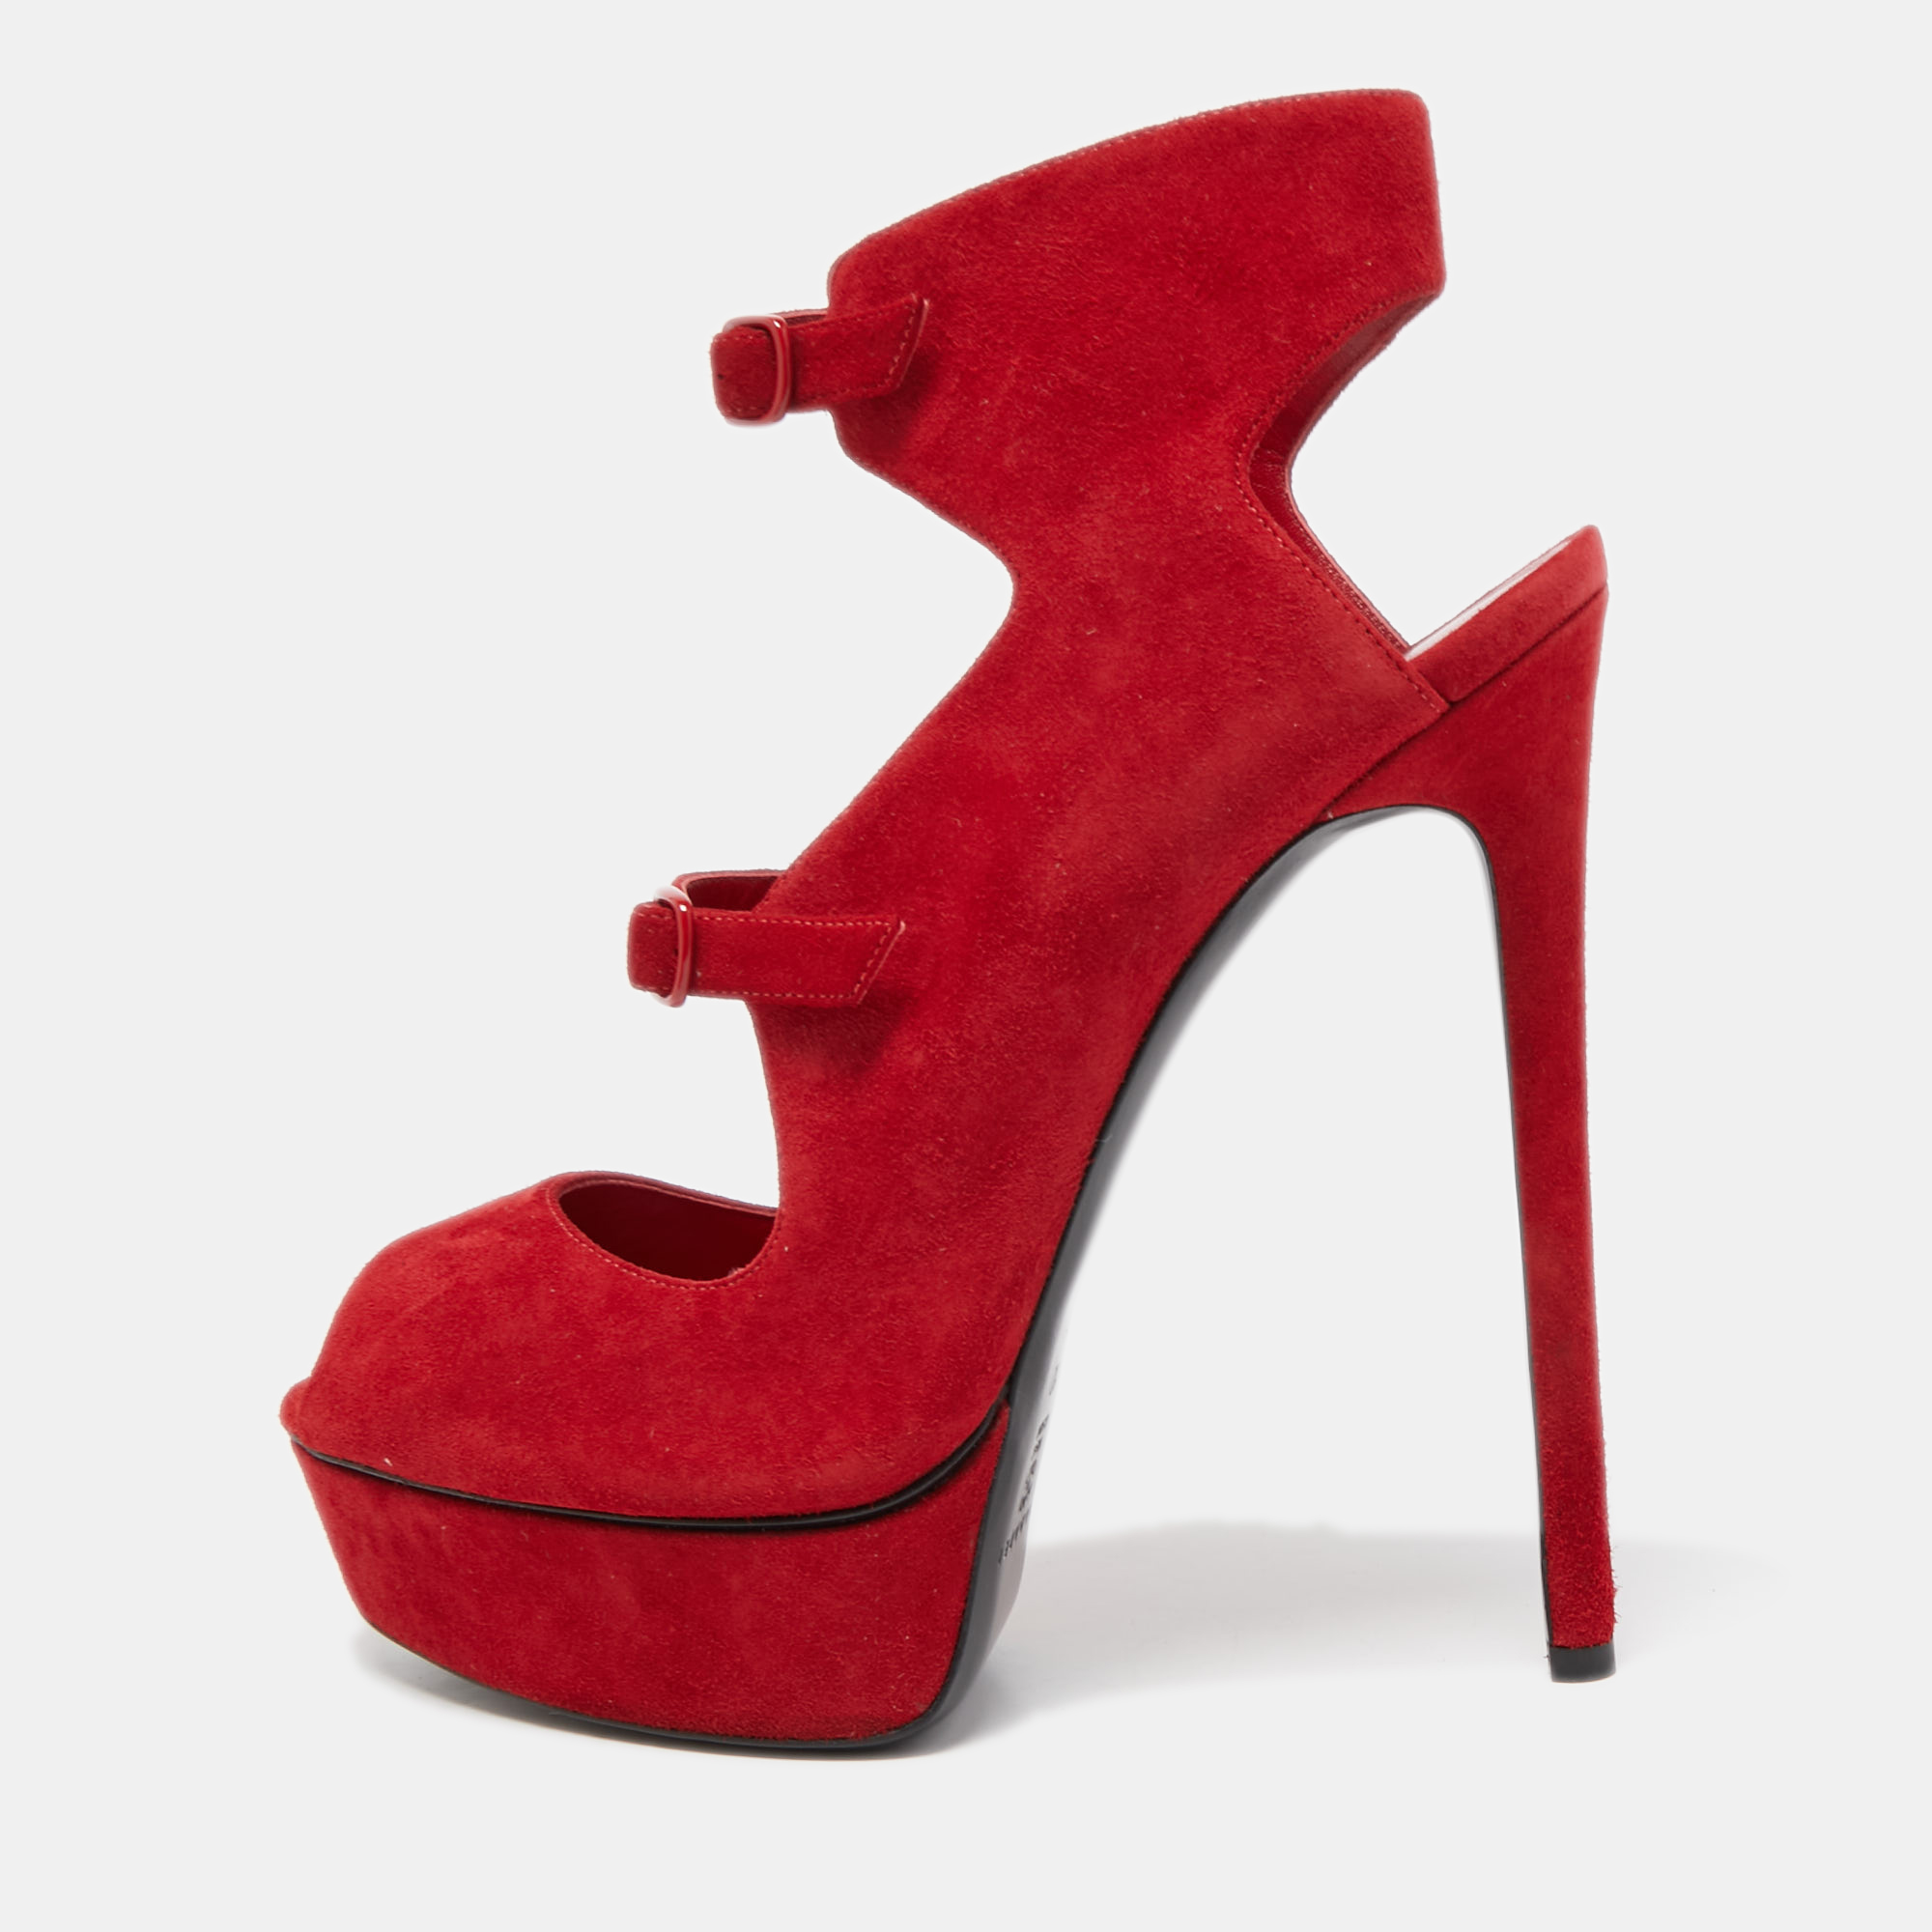 Casadei red suede buckle detail platform peep toe sandals size 40